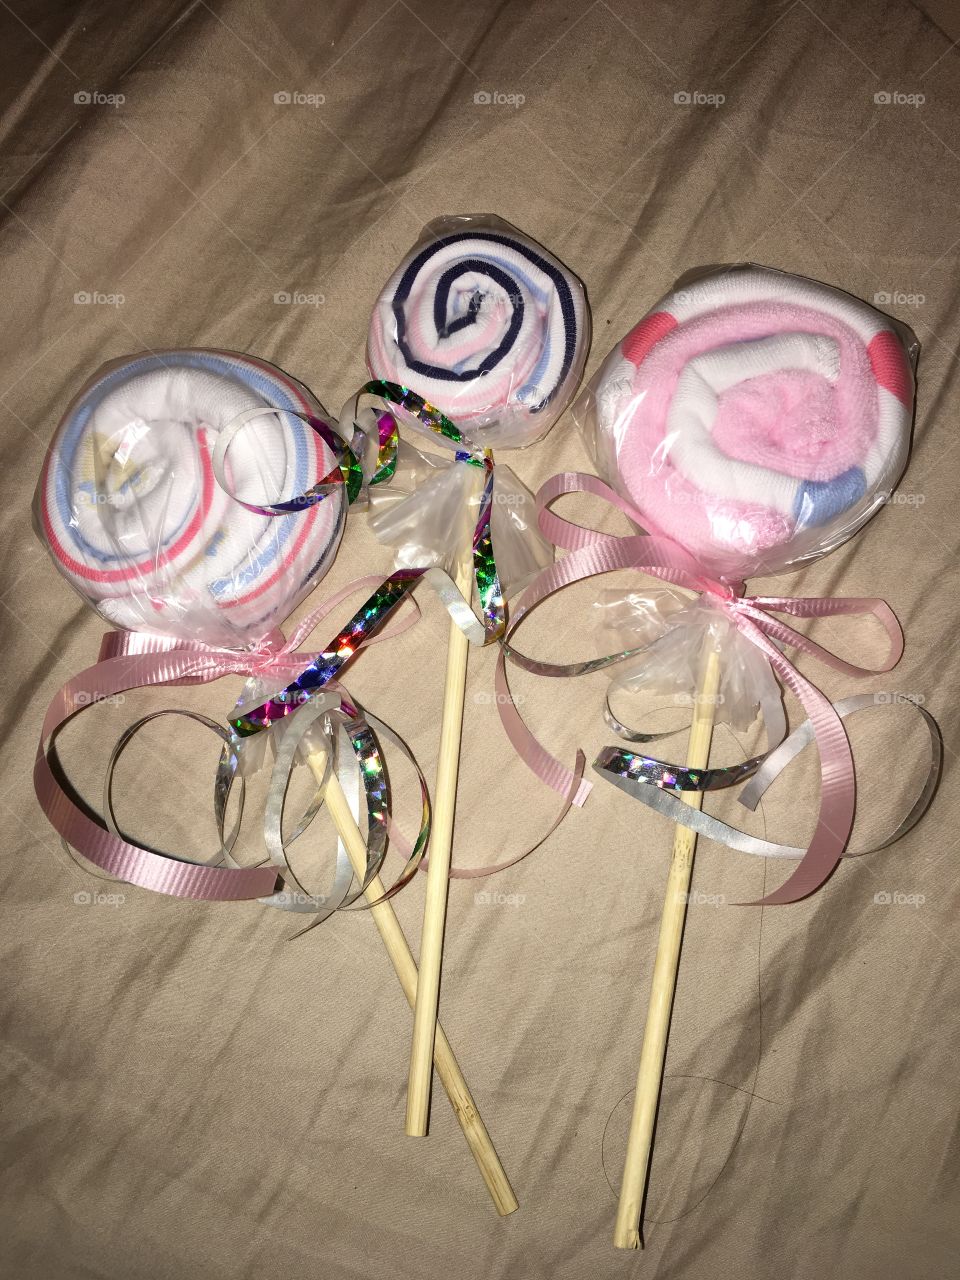 Homemade baby washcloth lollipops 